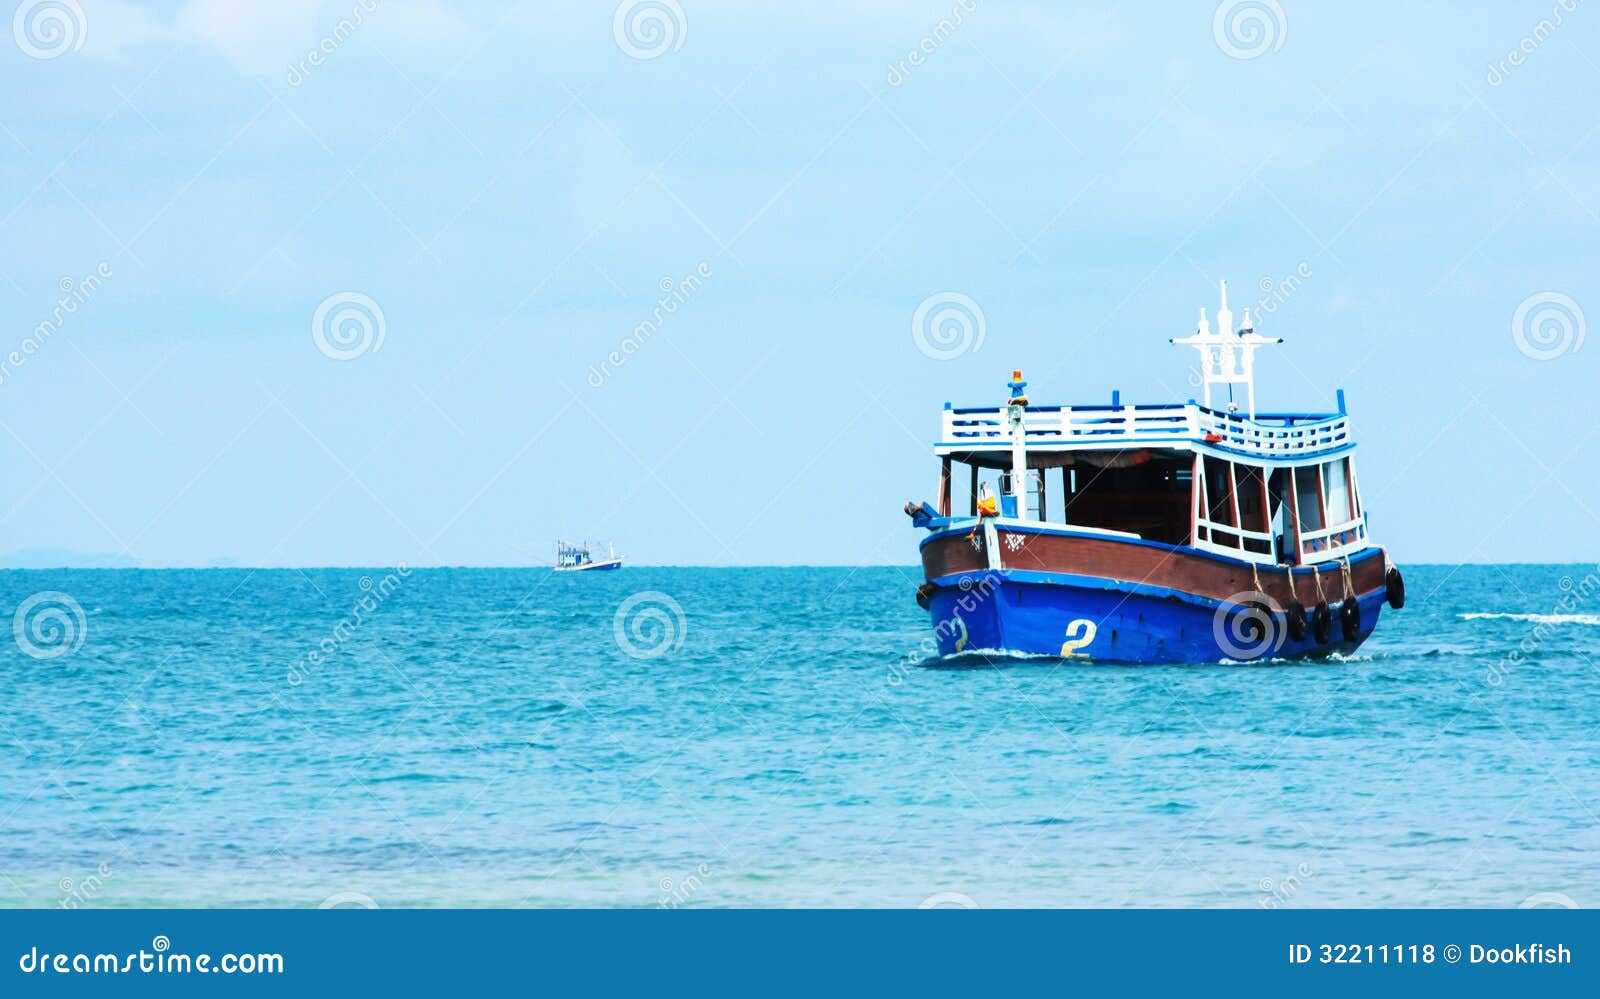 Thai fishing in blue sea